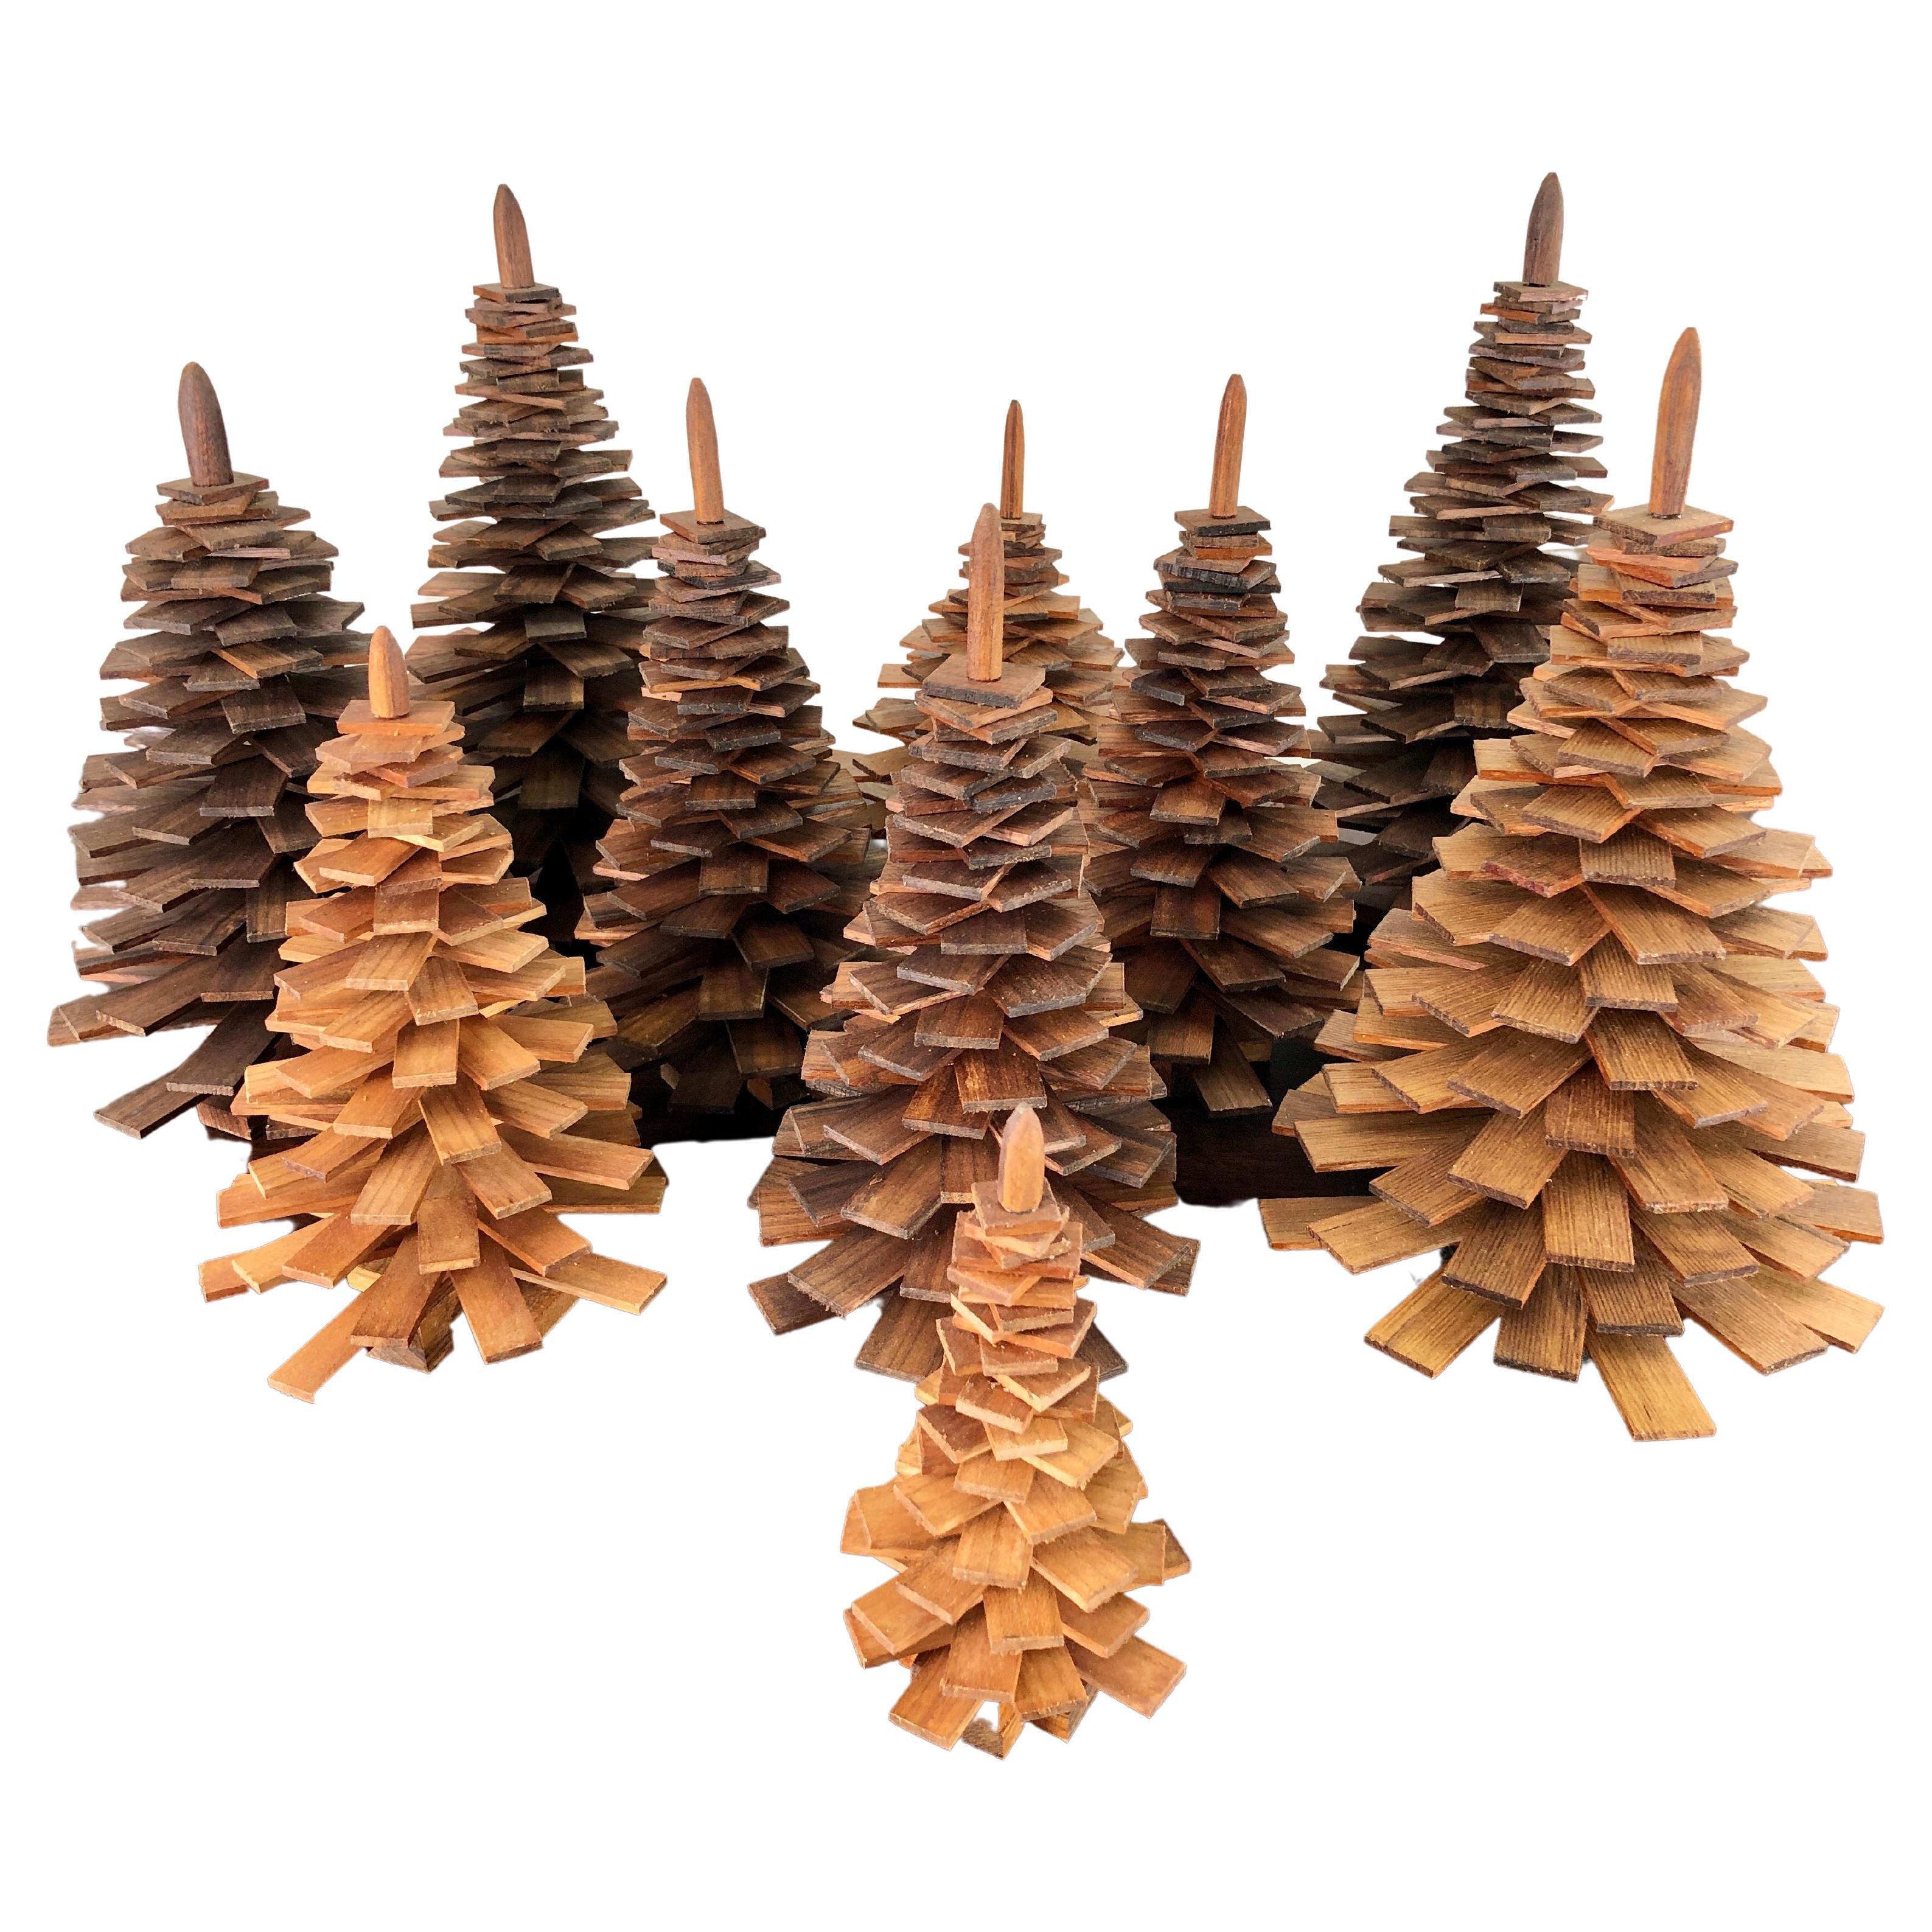 Decorative Handmade Wooden Christmas Trees